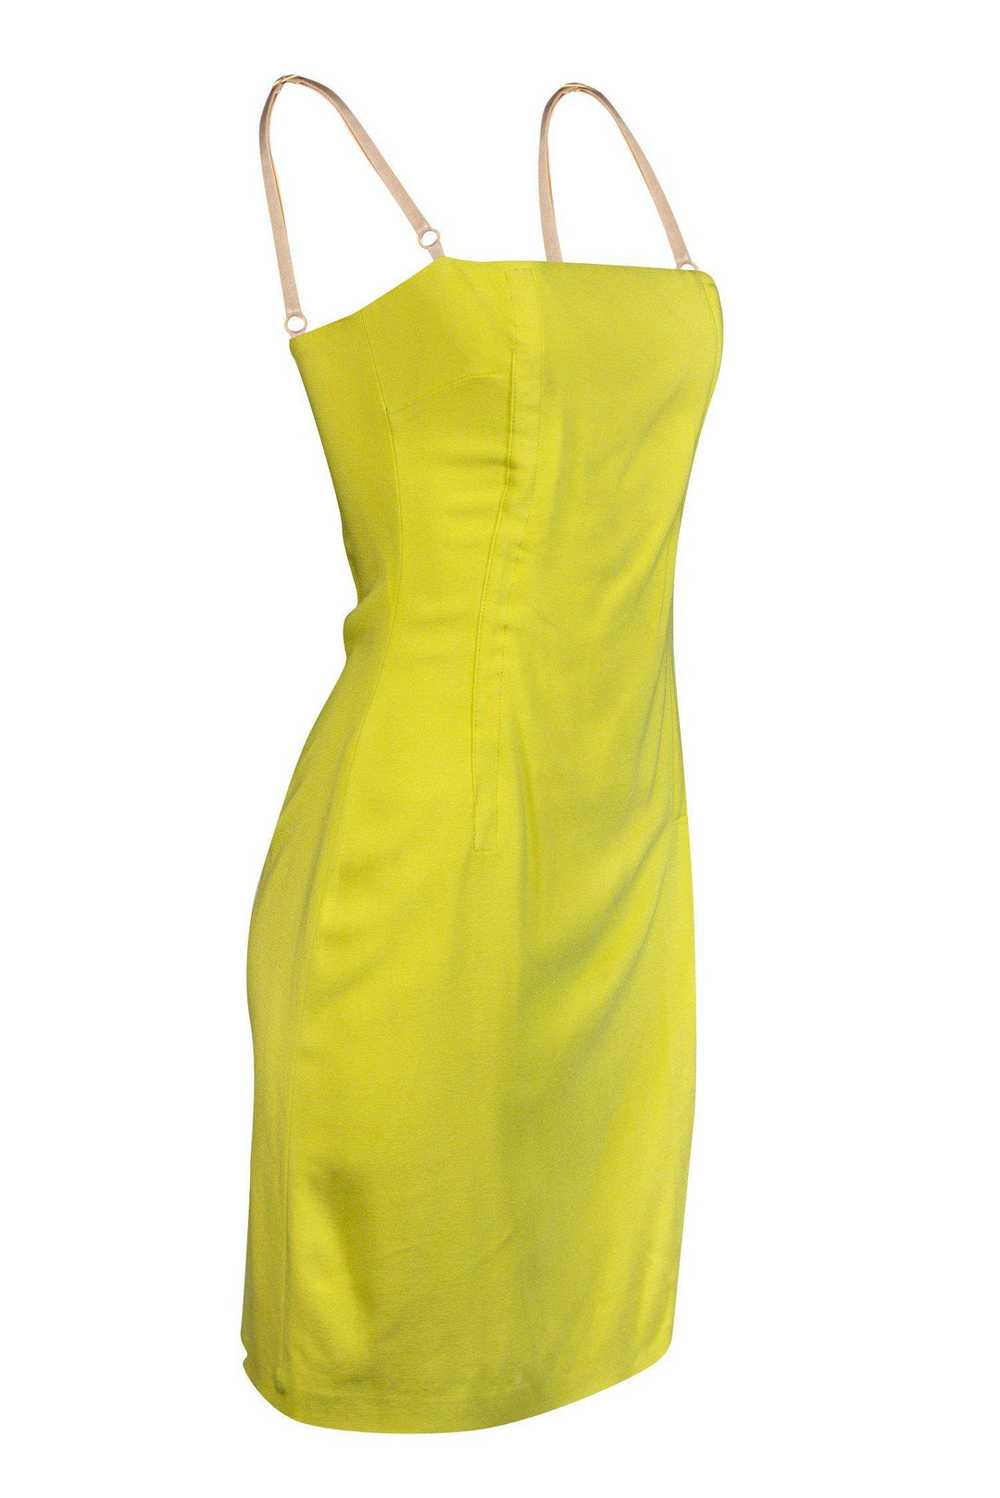 Dolce & Gabbana - Bright Yellow Bodycon Dress Sz 2 - image 2